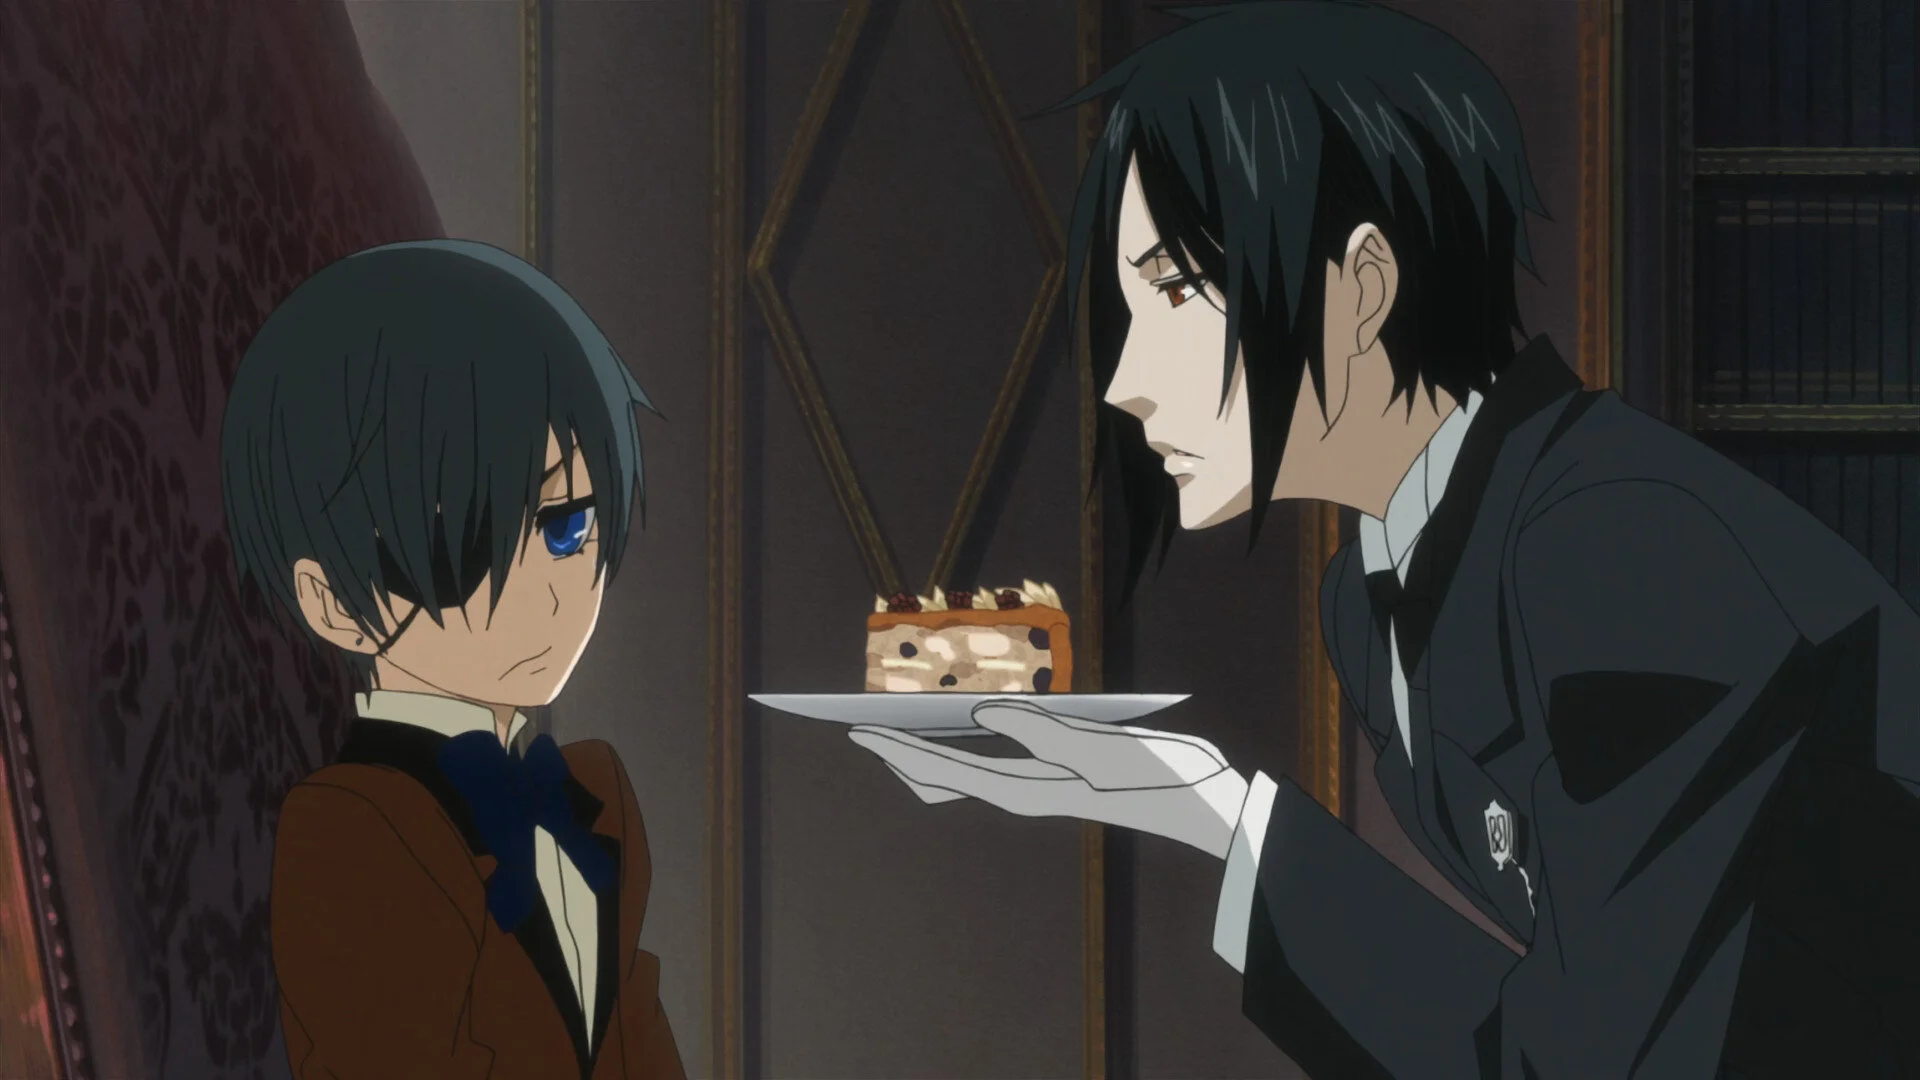 Sebastian presenting pastries for Ciel